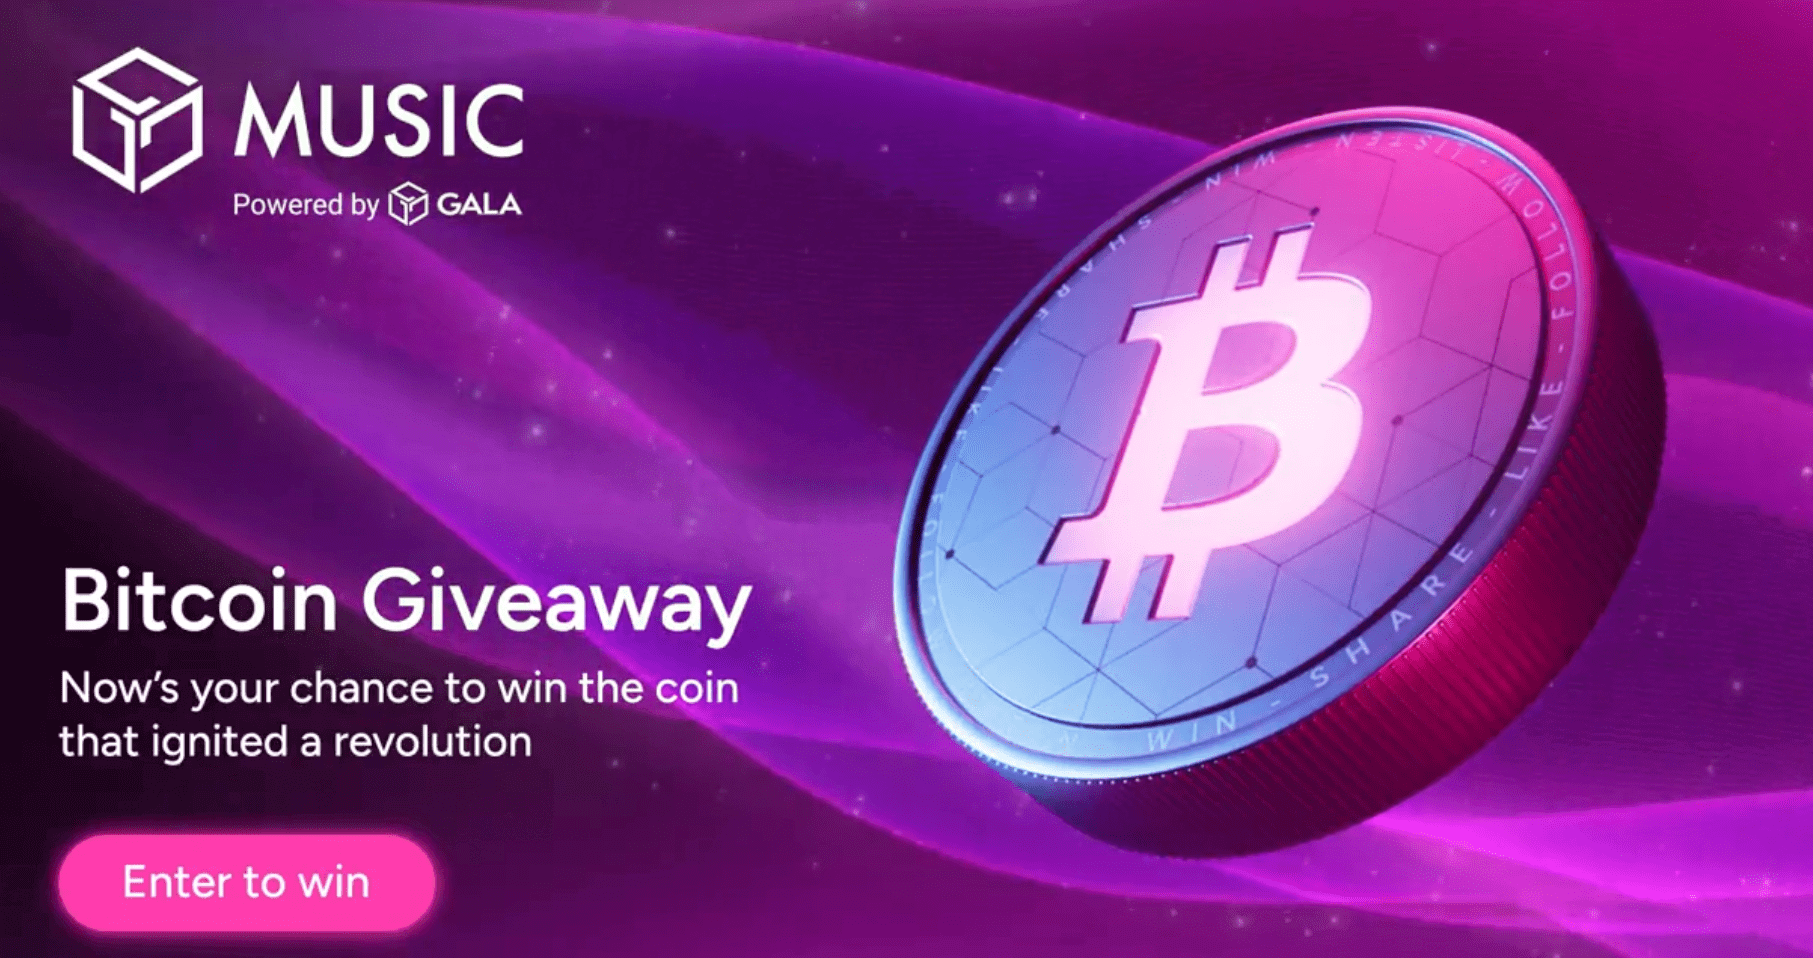 Win a free Bitcoin with Gala Music